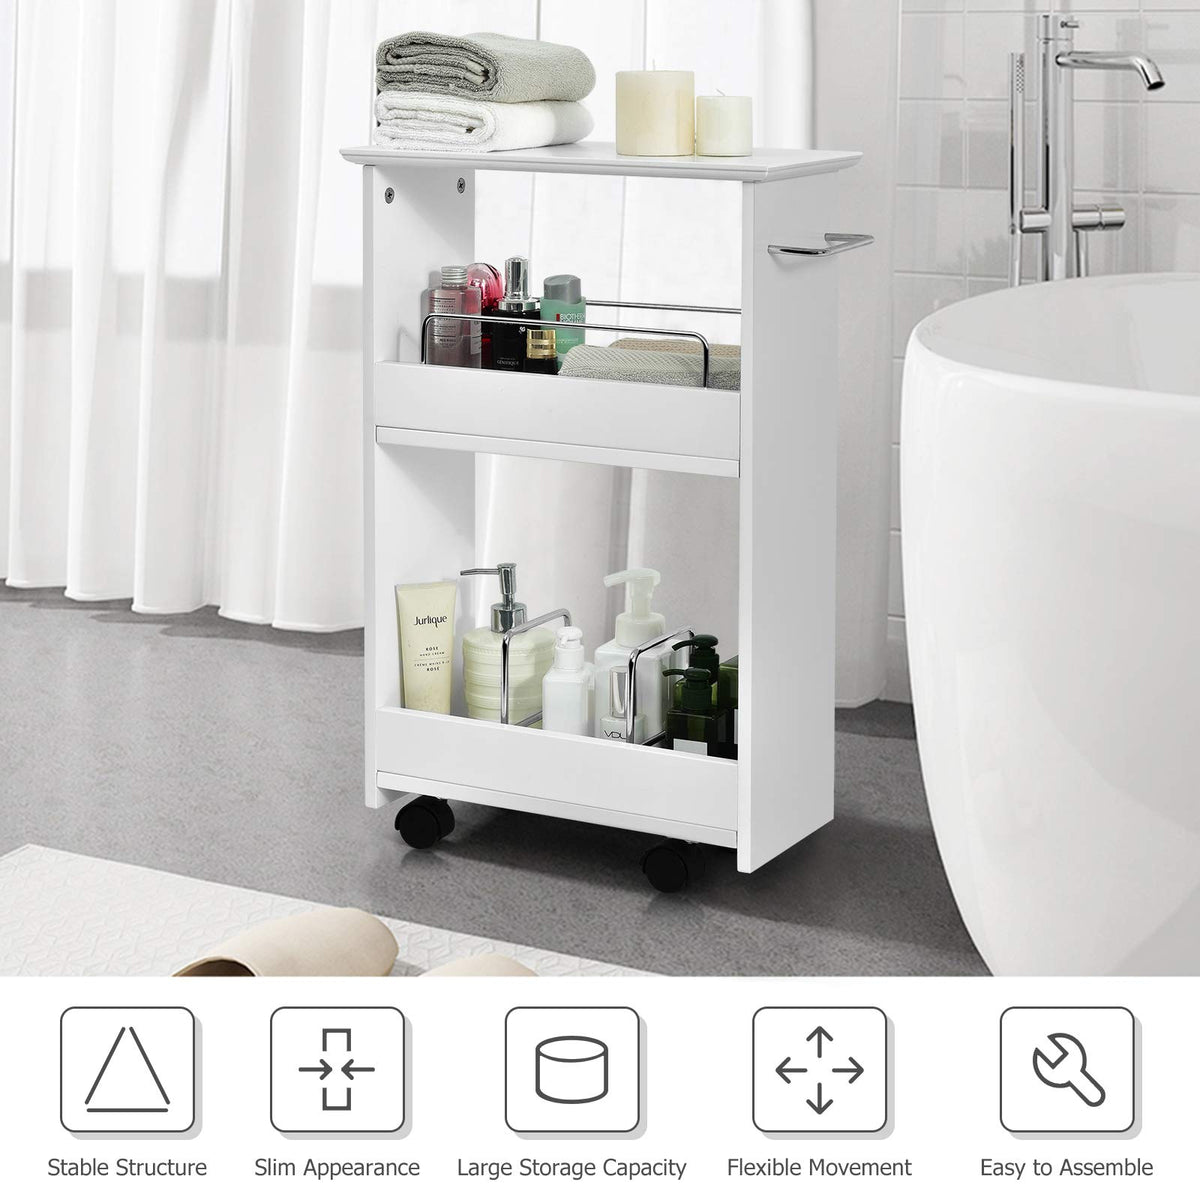 Giantex 2-Tier Slim Storage Cart, Bathroom Rolling Utility Cart with Shelves, Mobile Shelving Unit Organizer